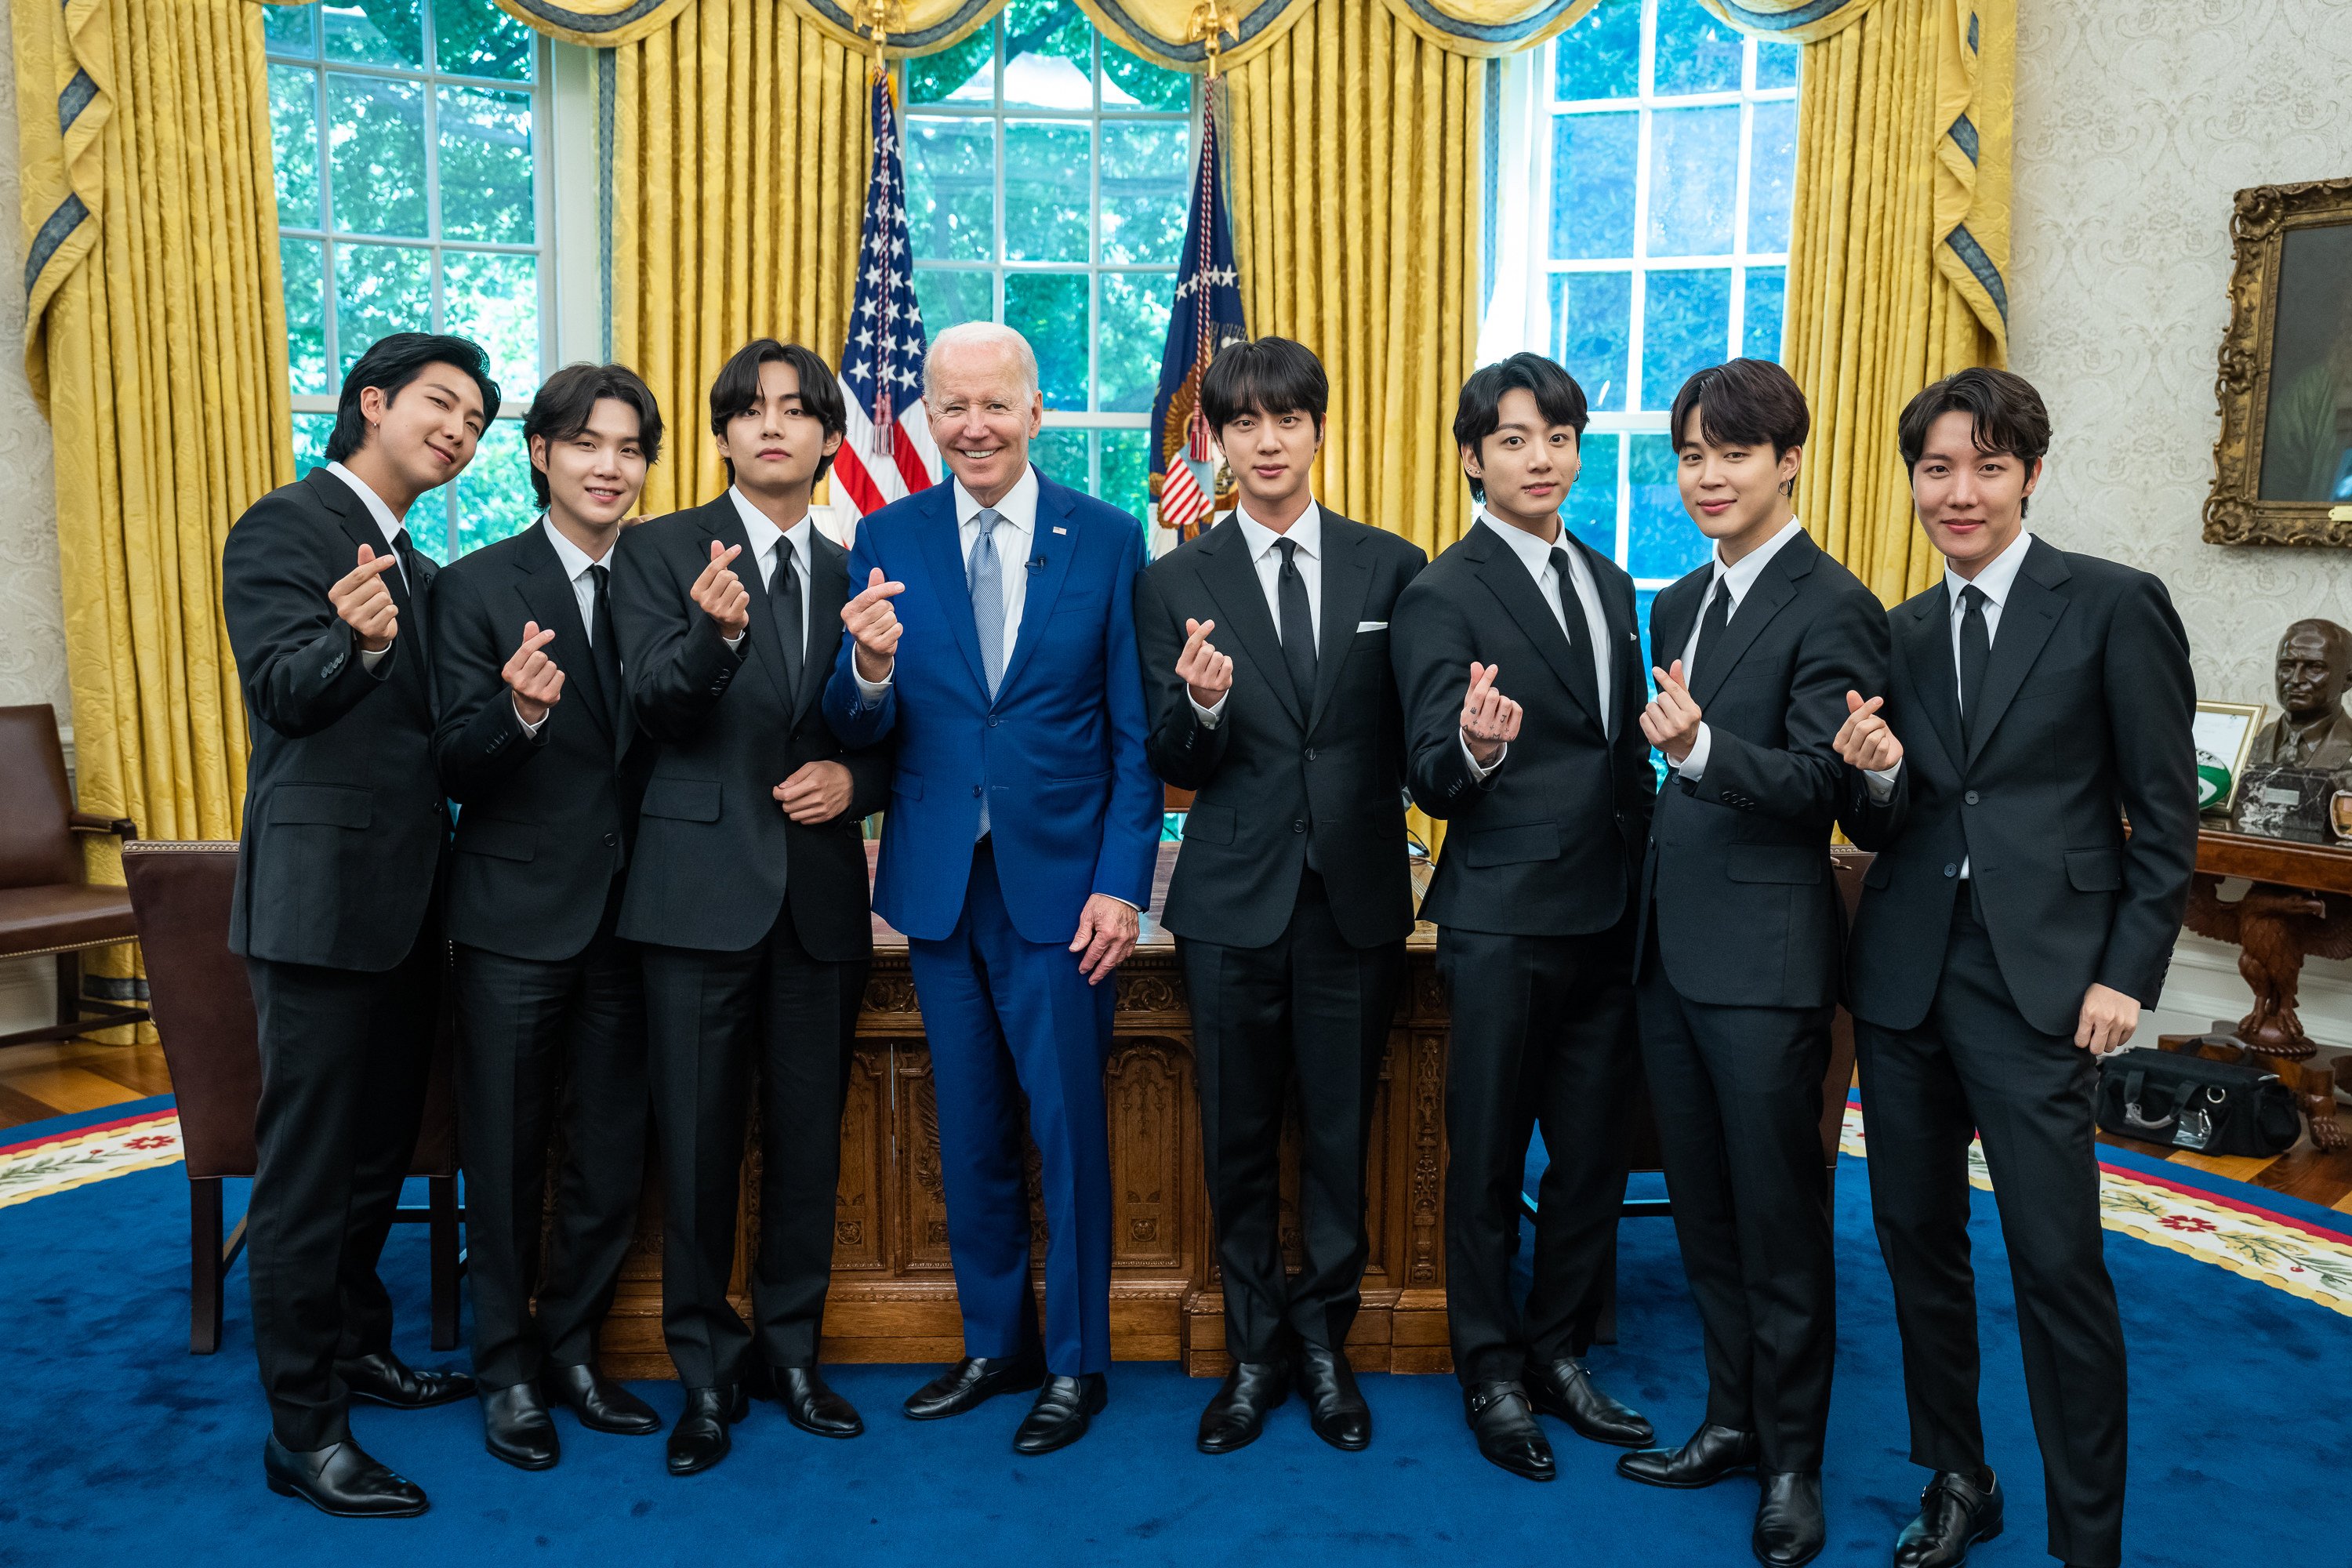 President Joe Biden Said the Members of BTS Have ‘Great Talent’